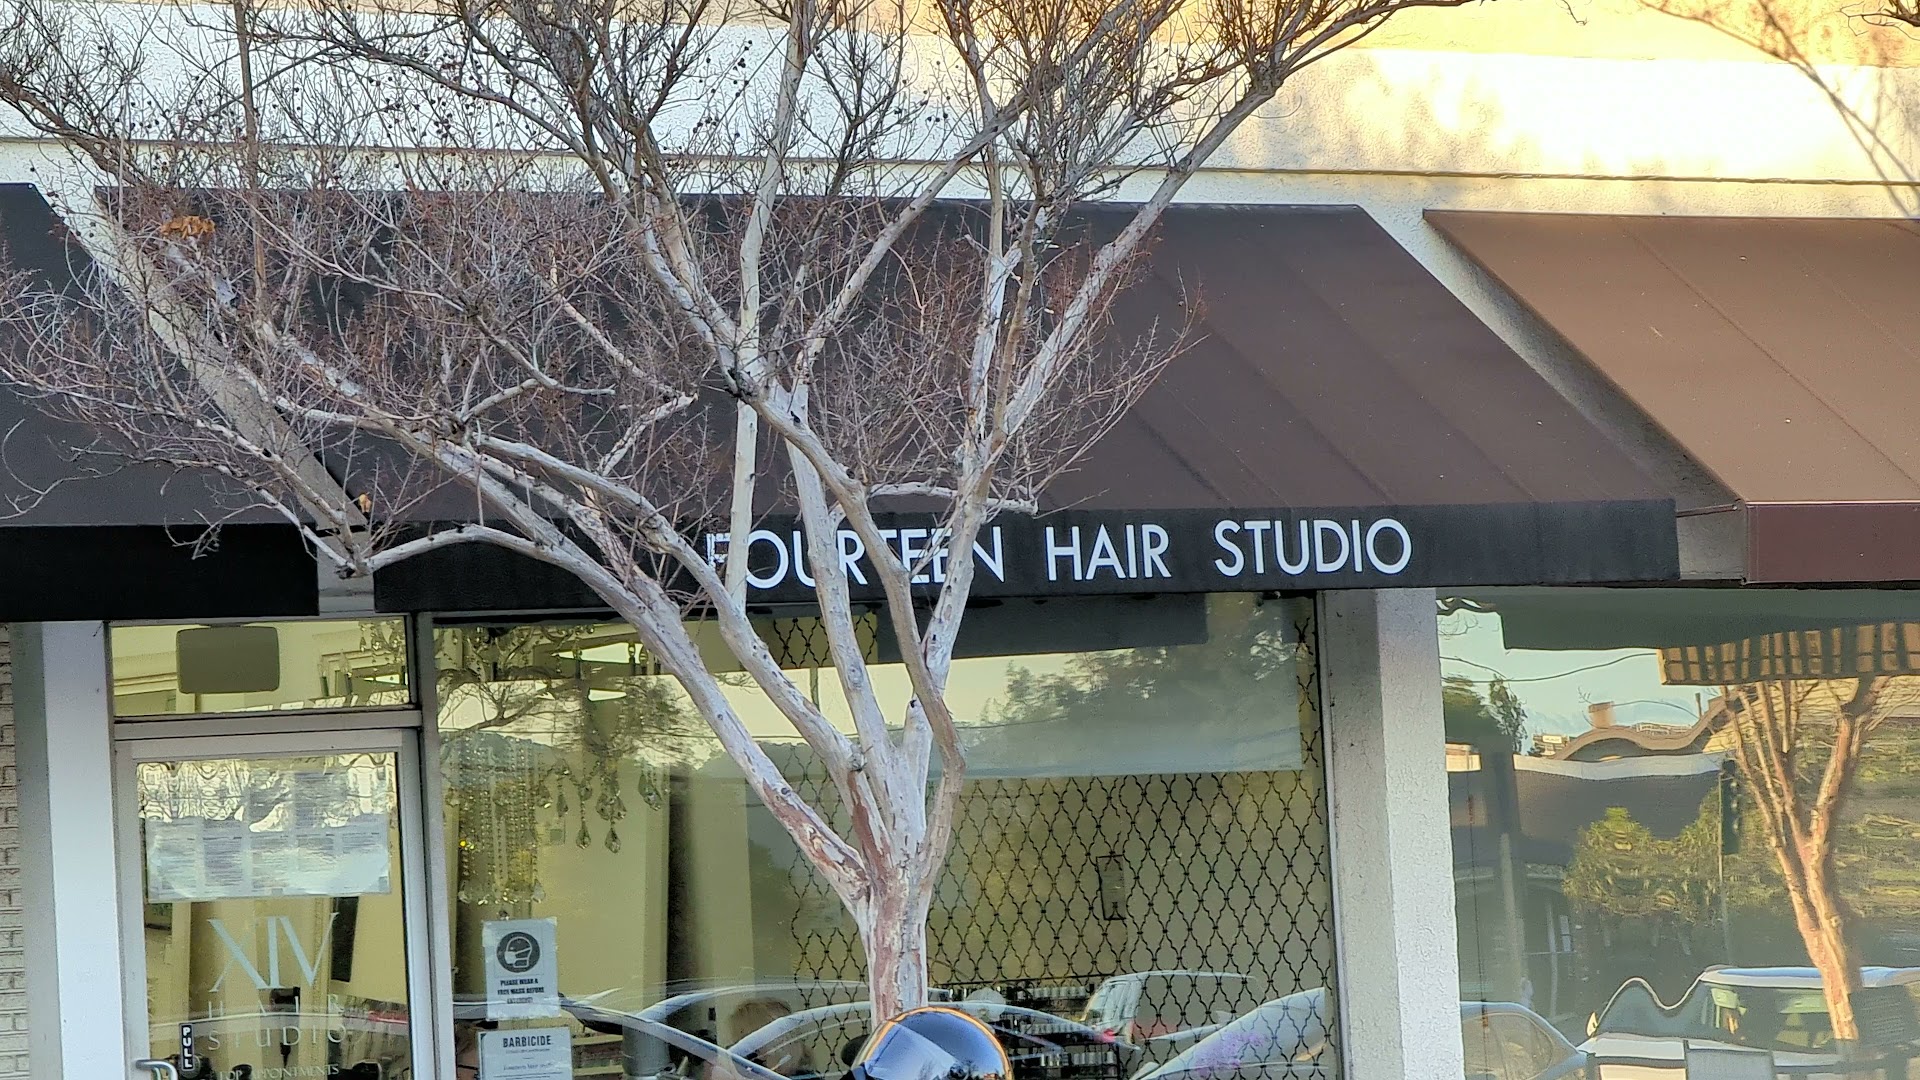 Fourteen Hair Salon